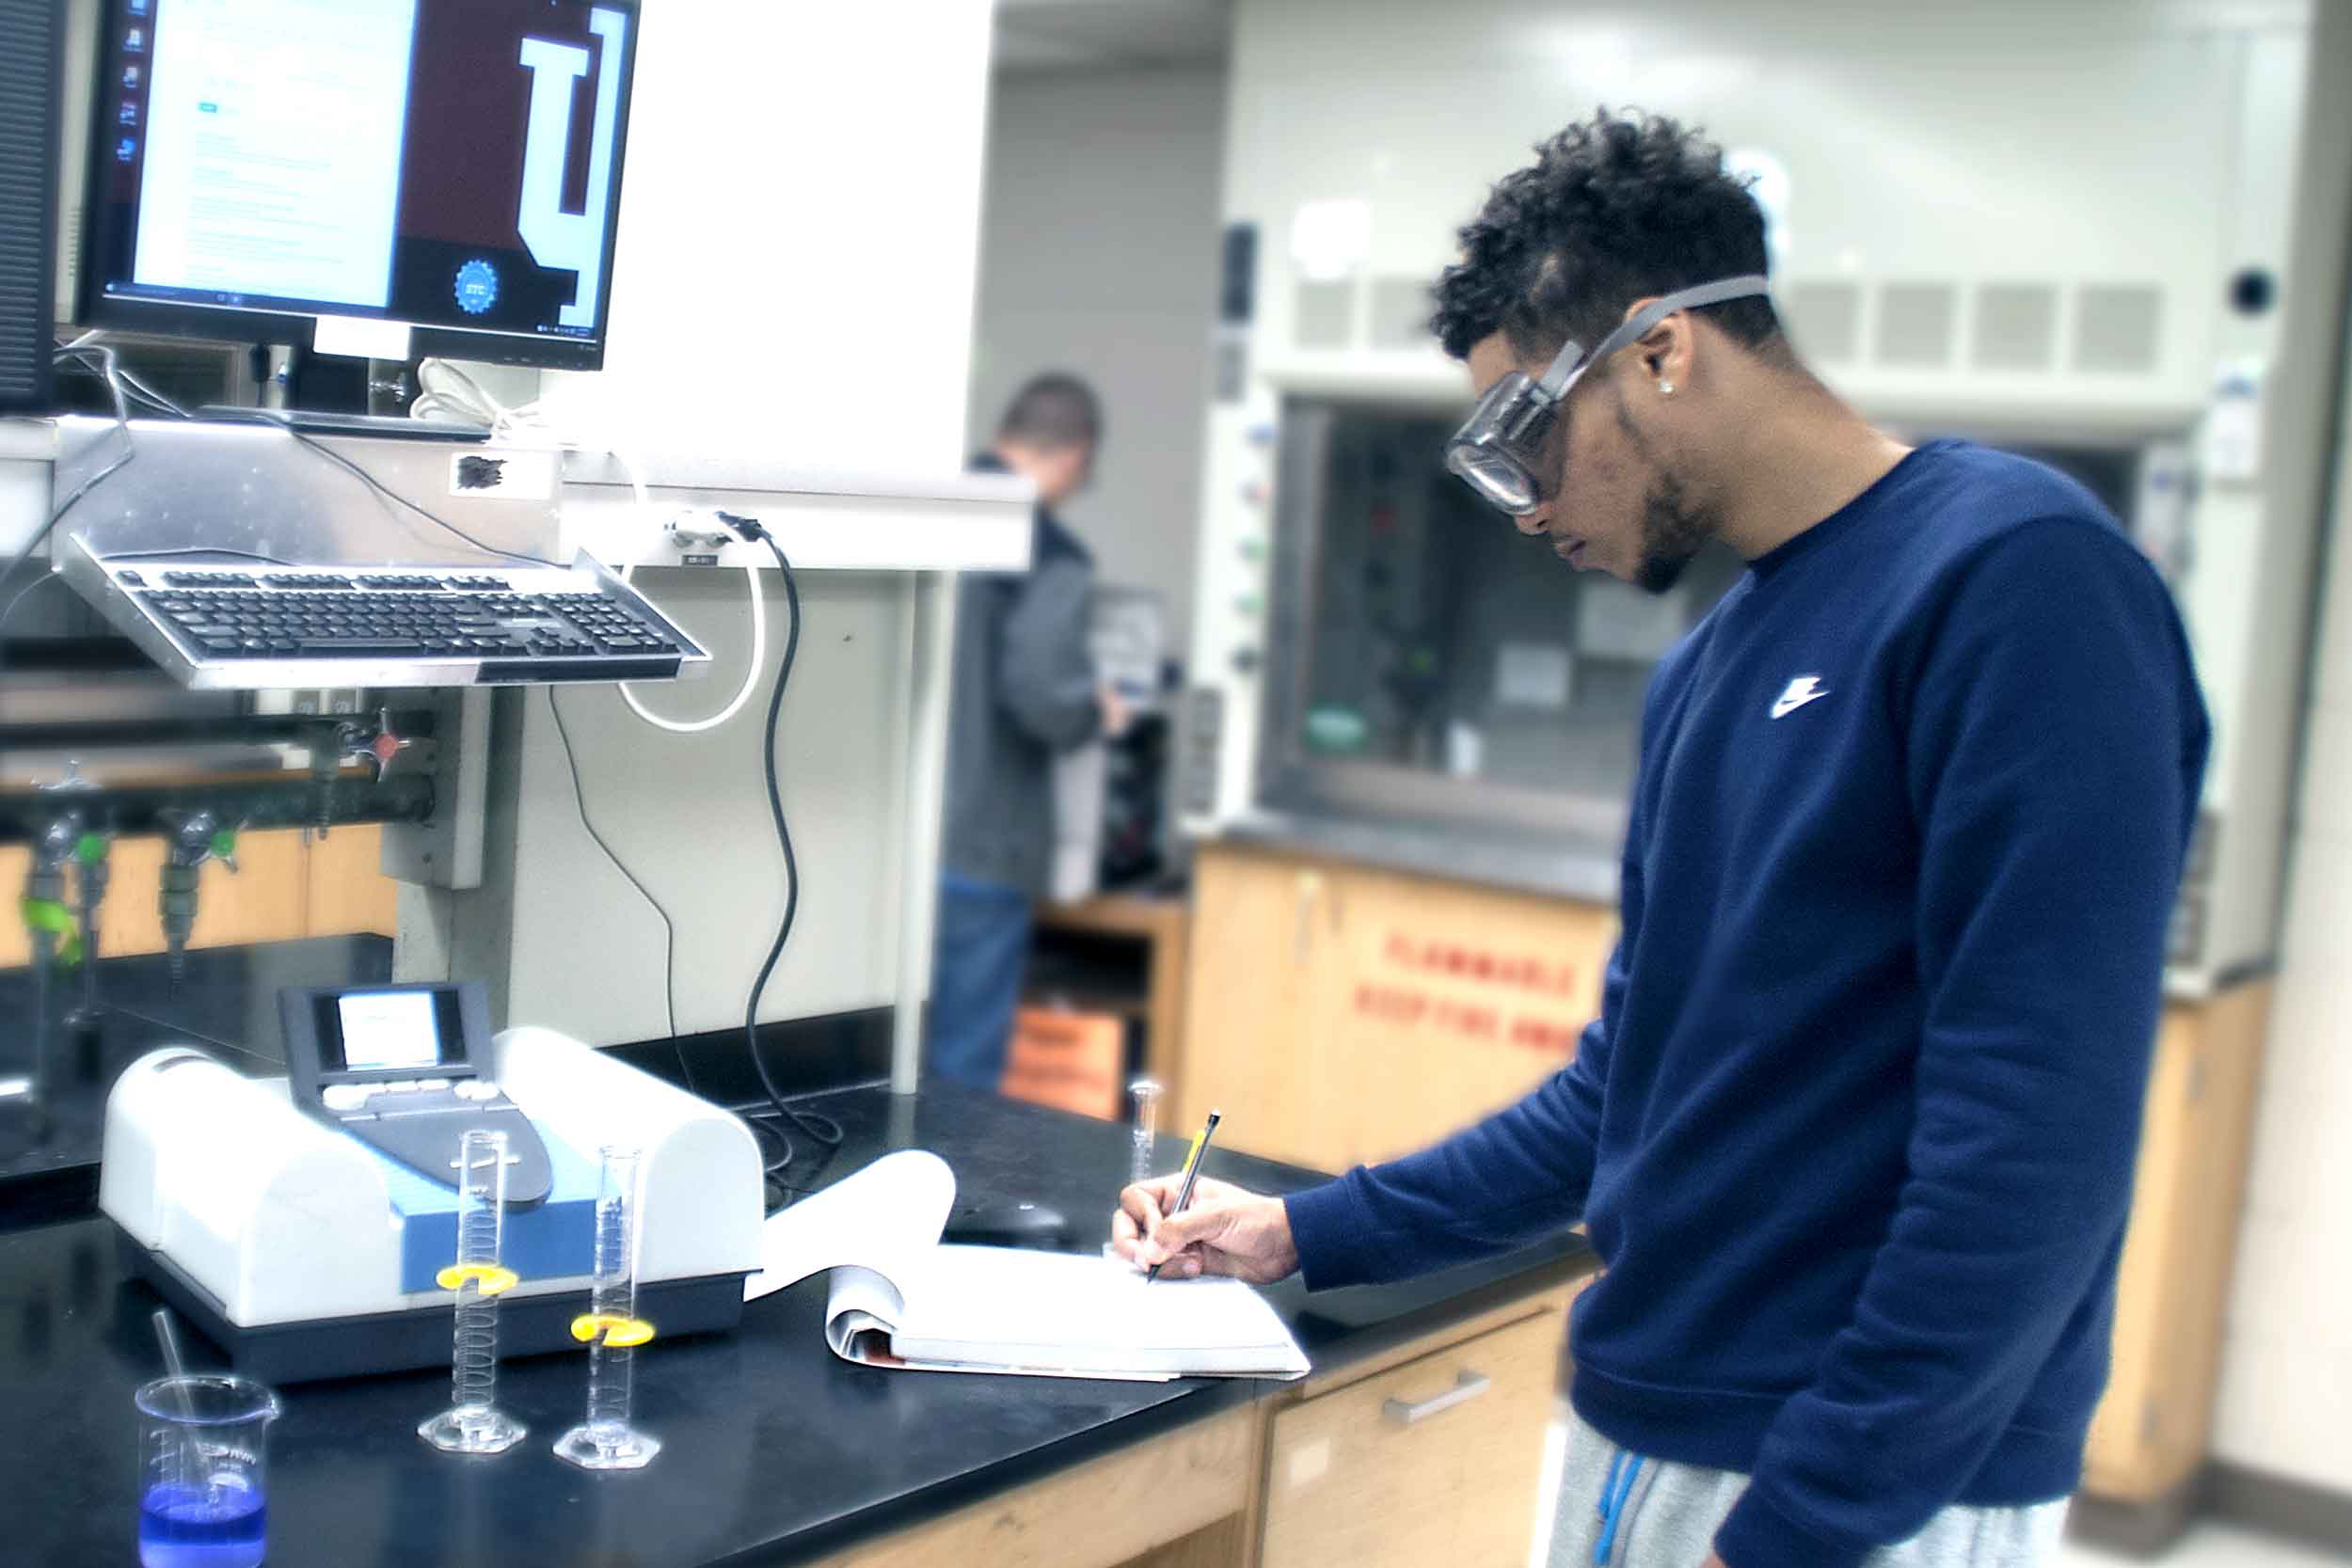 Undergraduates working in a lab